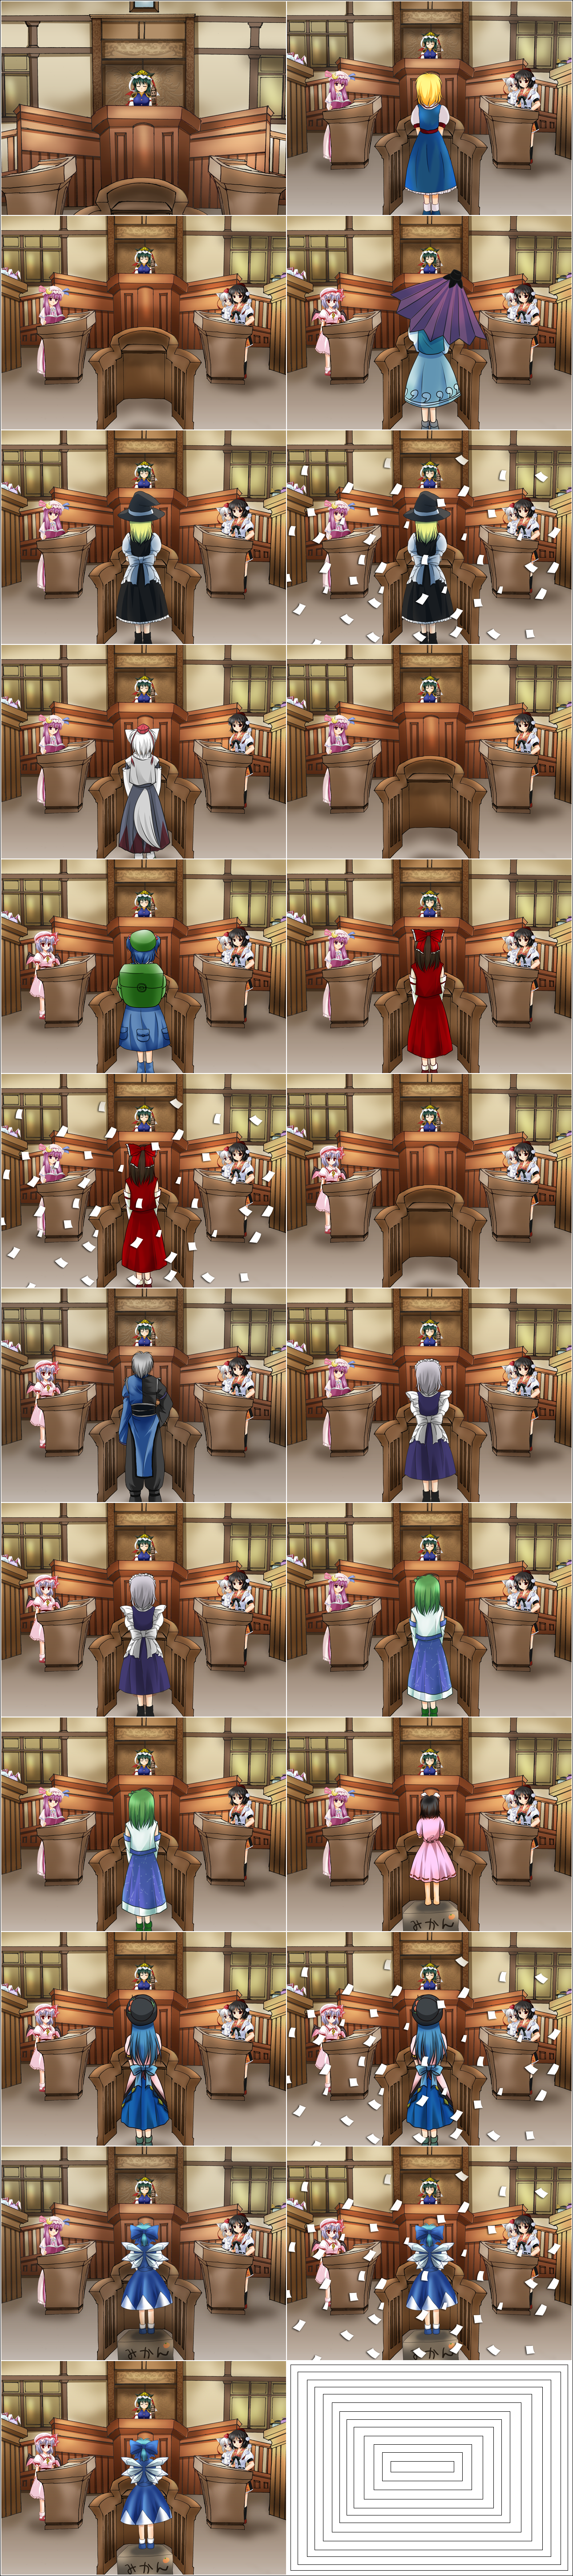 Shin Gyakuten Touhou - Courtroom Overview